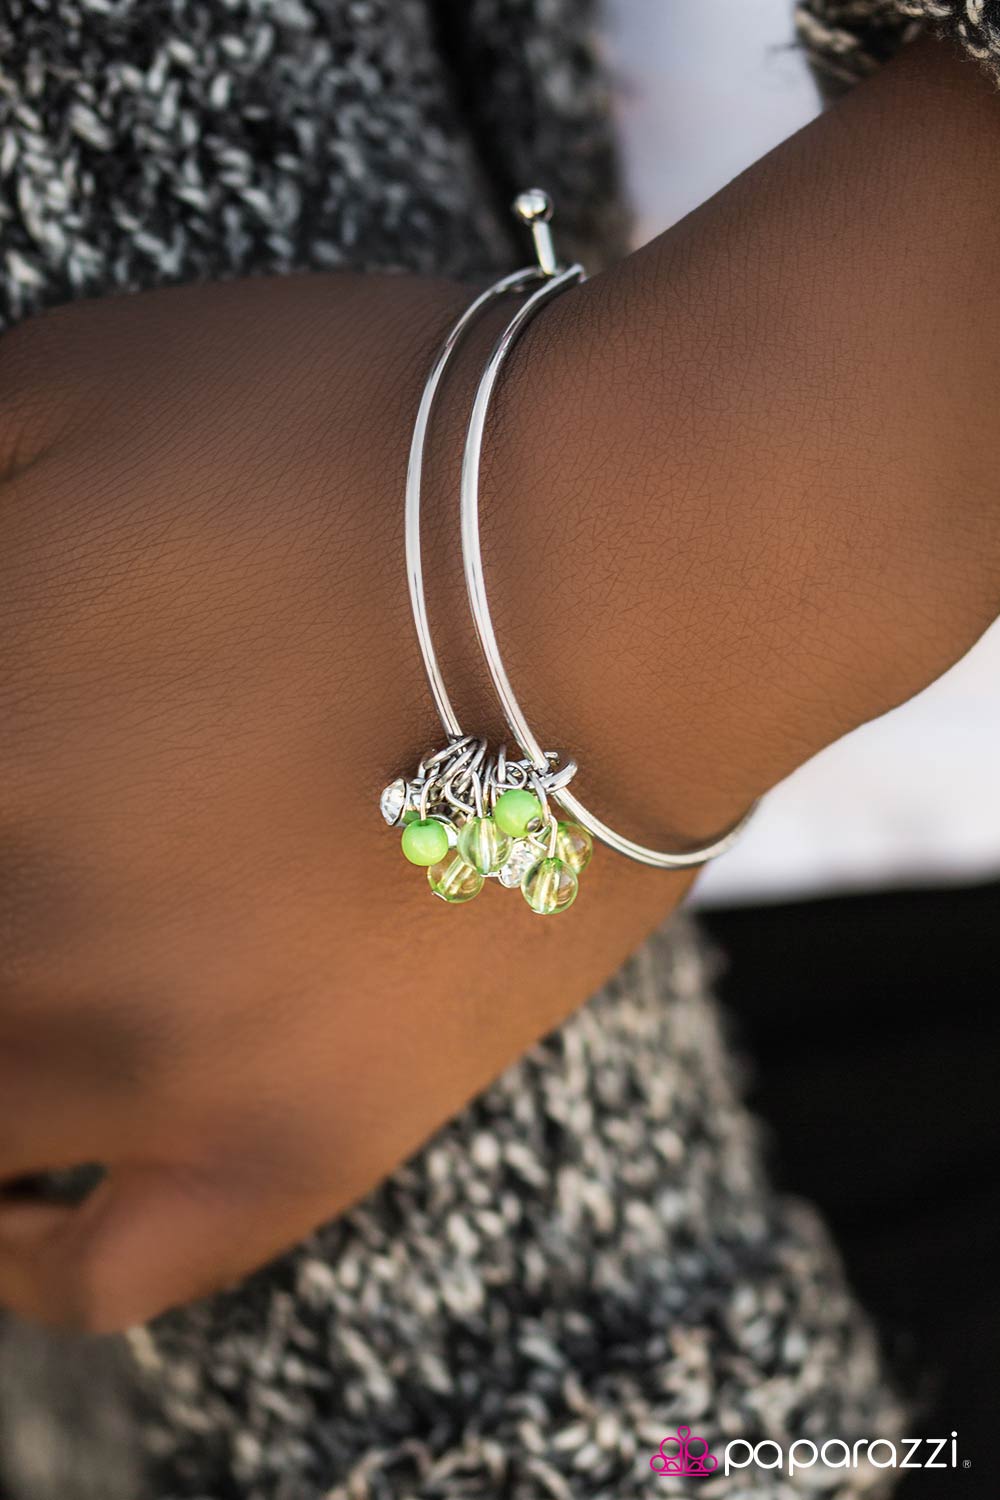 Spring Sensation (Green Bracelet) - Paparazzi $5 Jewelry Join or Shop ...